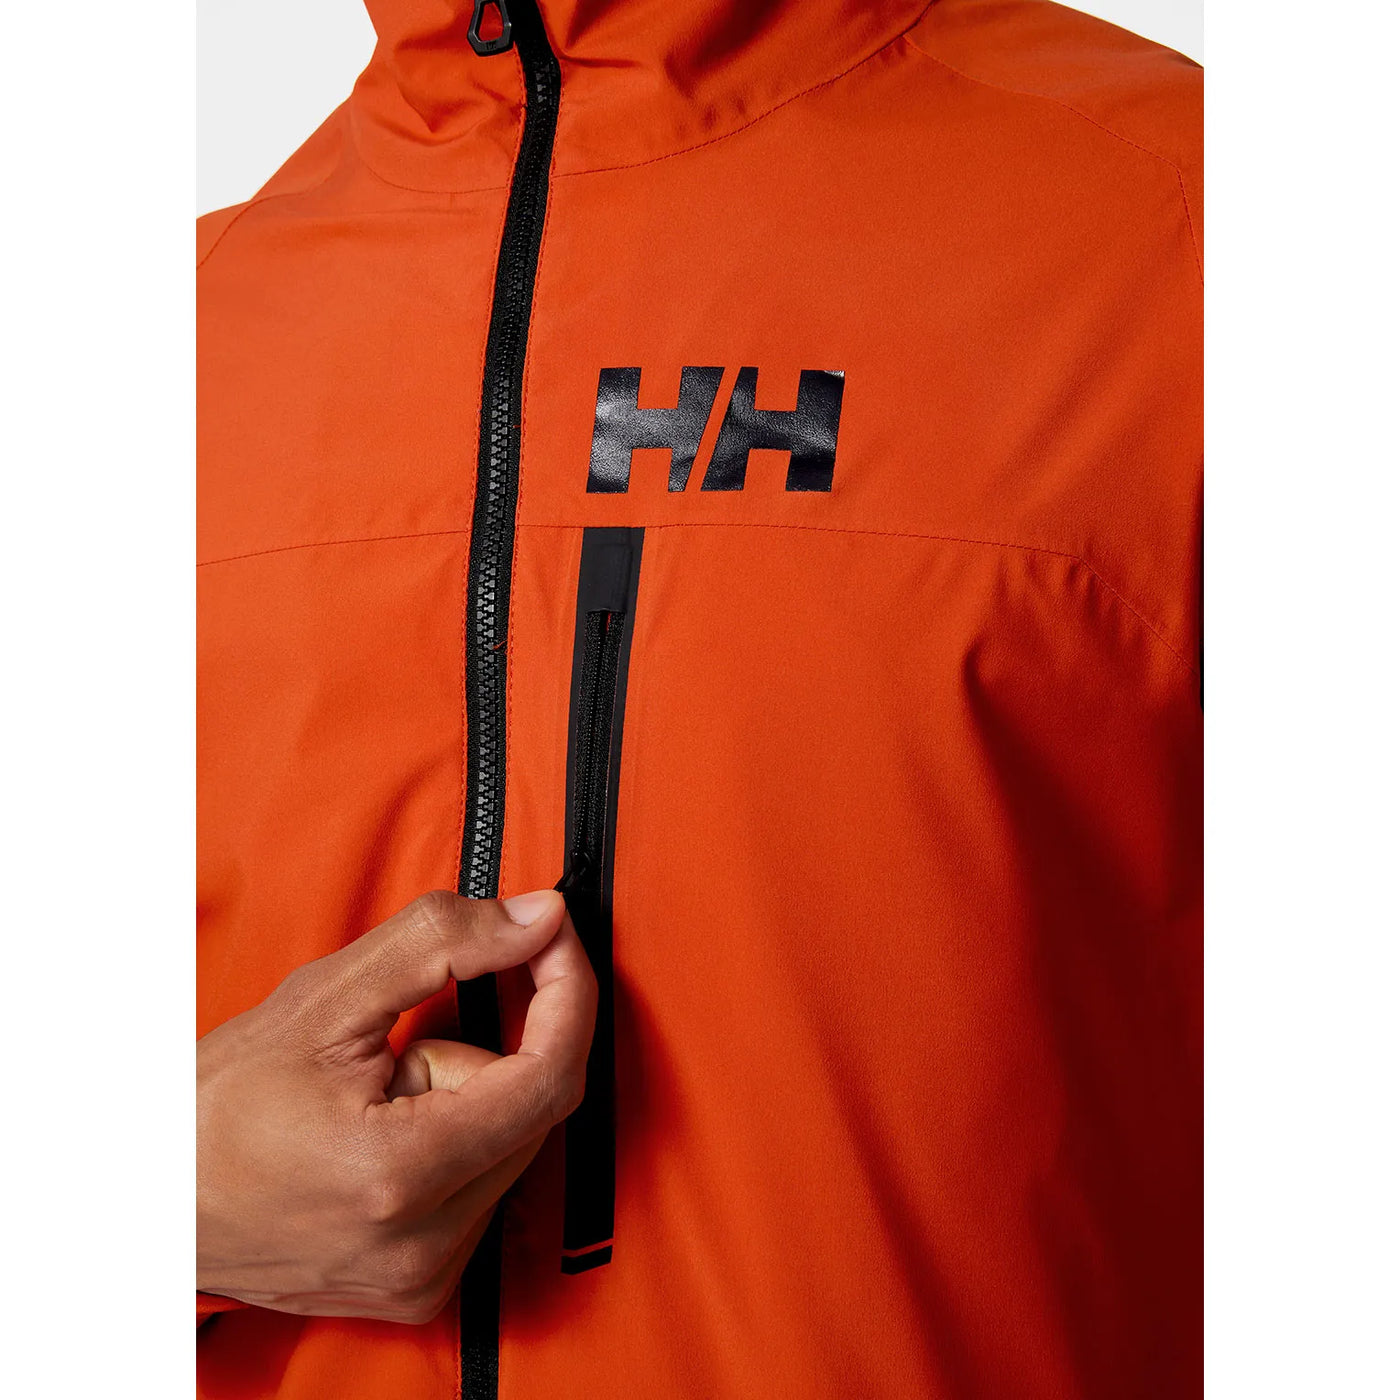 Helly Hansen HP Racing Sailing Jacket | Tilbud: 960,00 DKK - Indkøbsforening